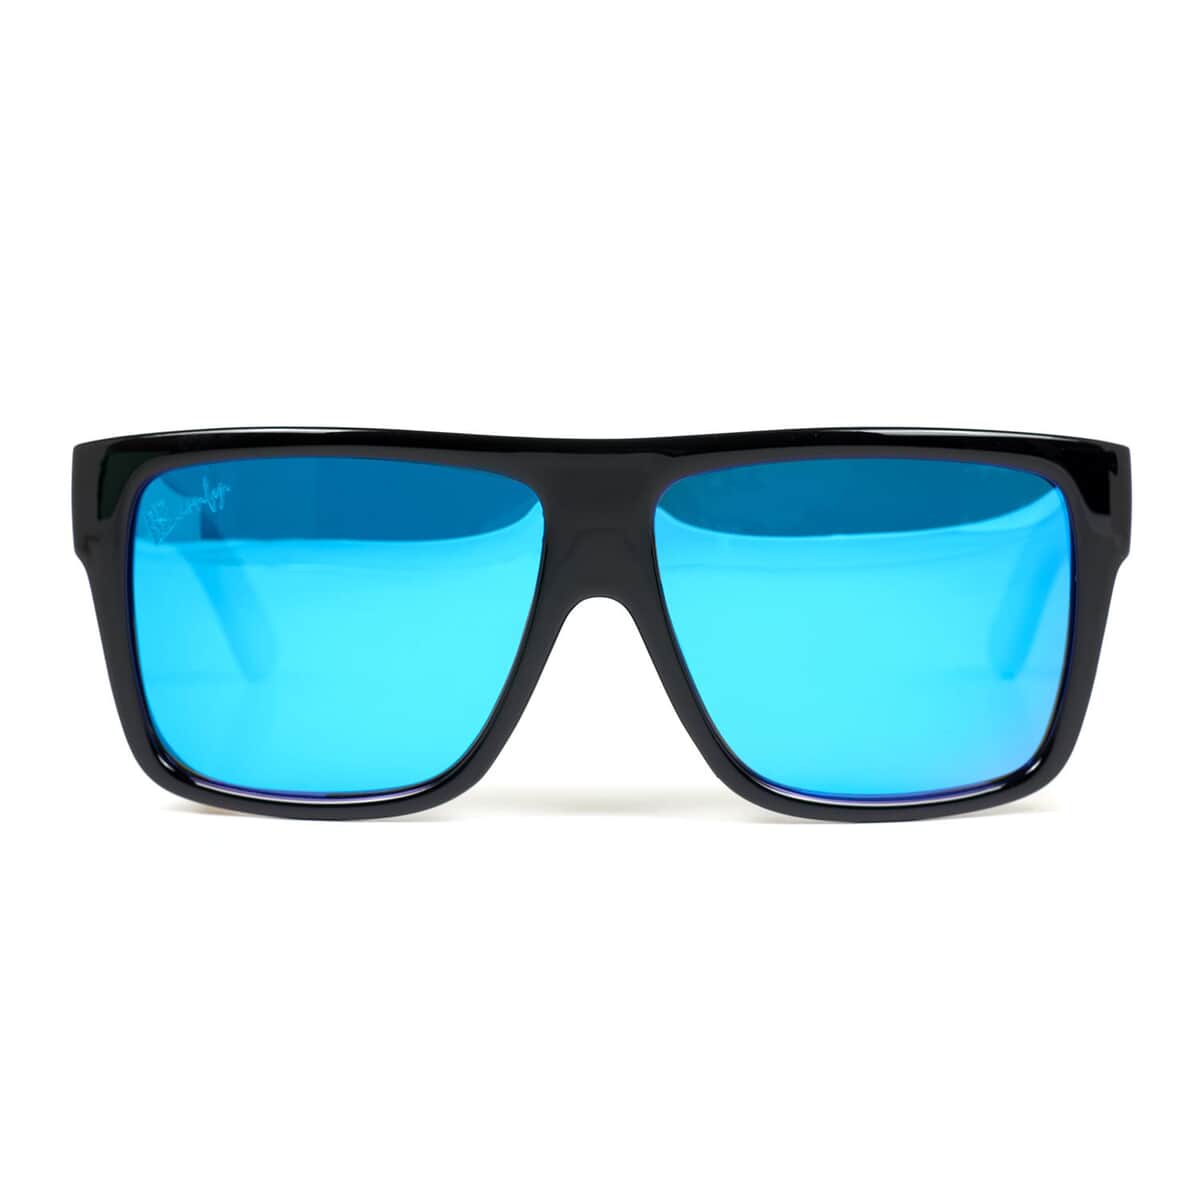 Bamfy Oakland UV400 Polarized Sunglasses with Bamboo Legs and Case -Blue image number 0